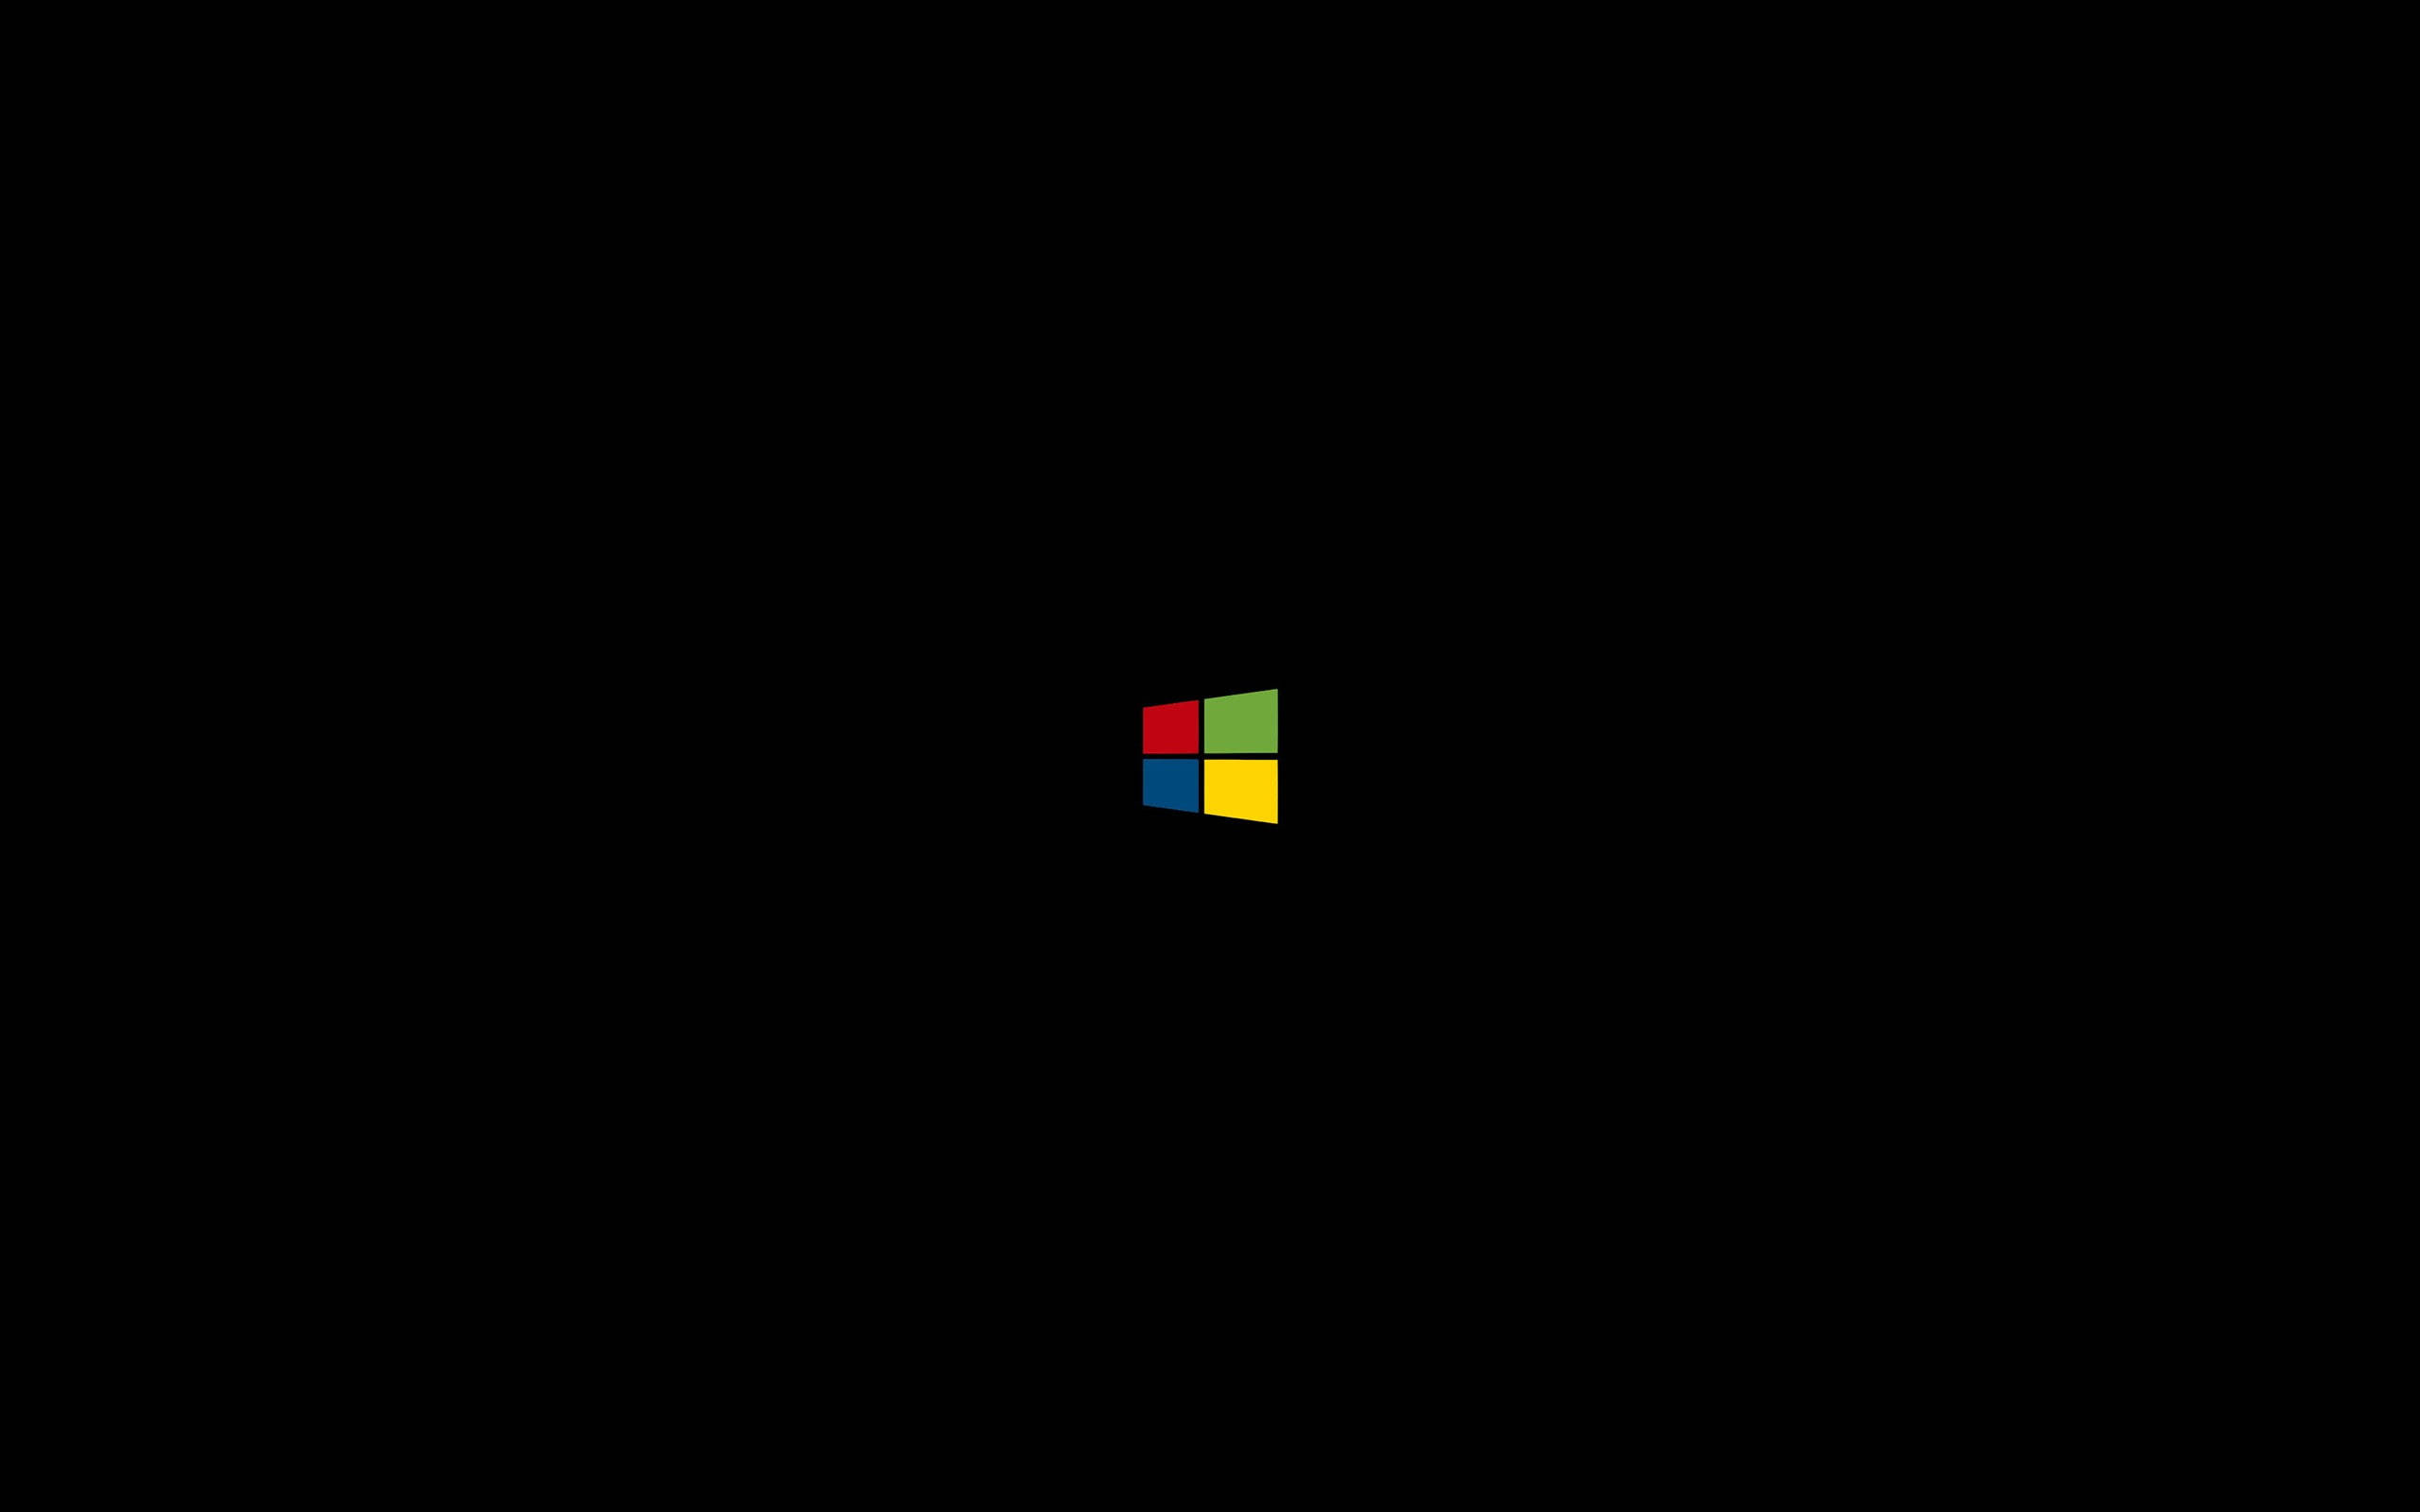 Simple Windows Logo Backgrounds Wallpaper